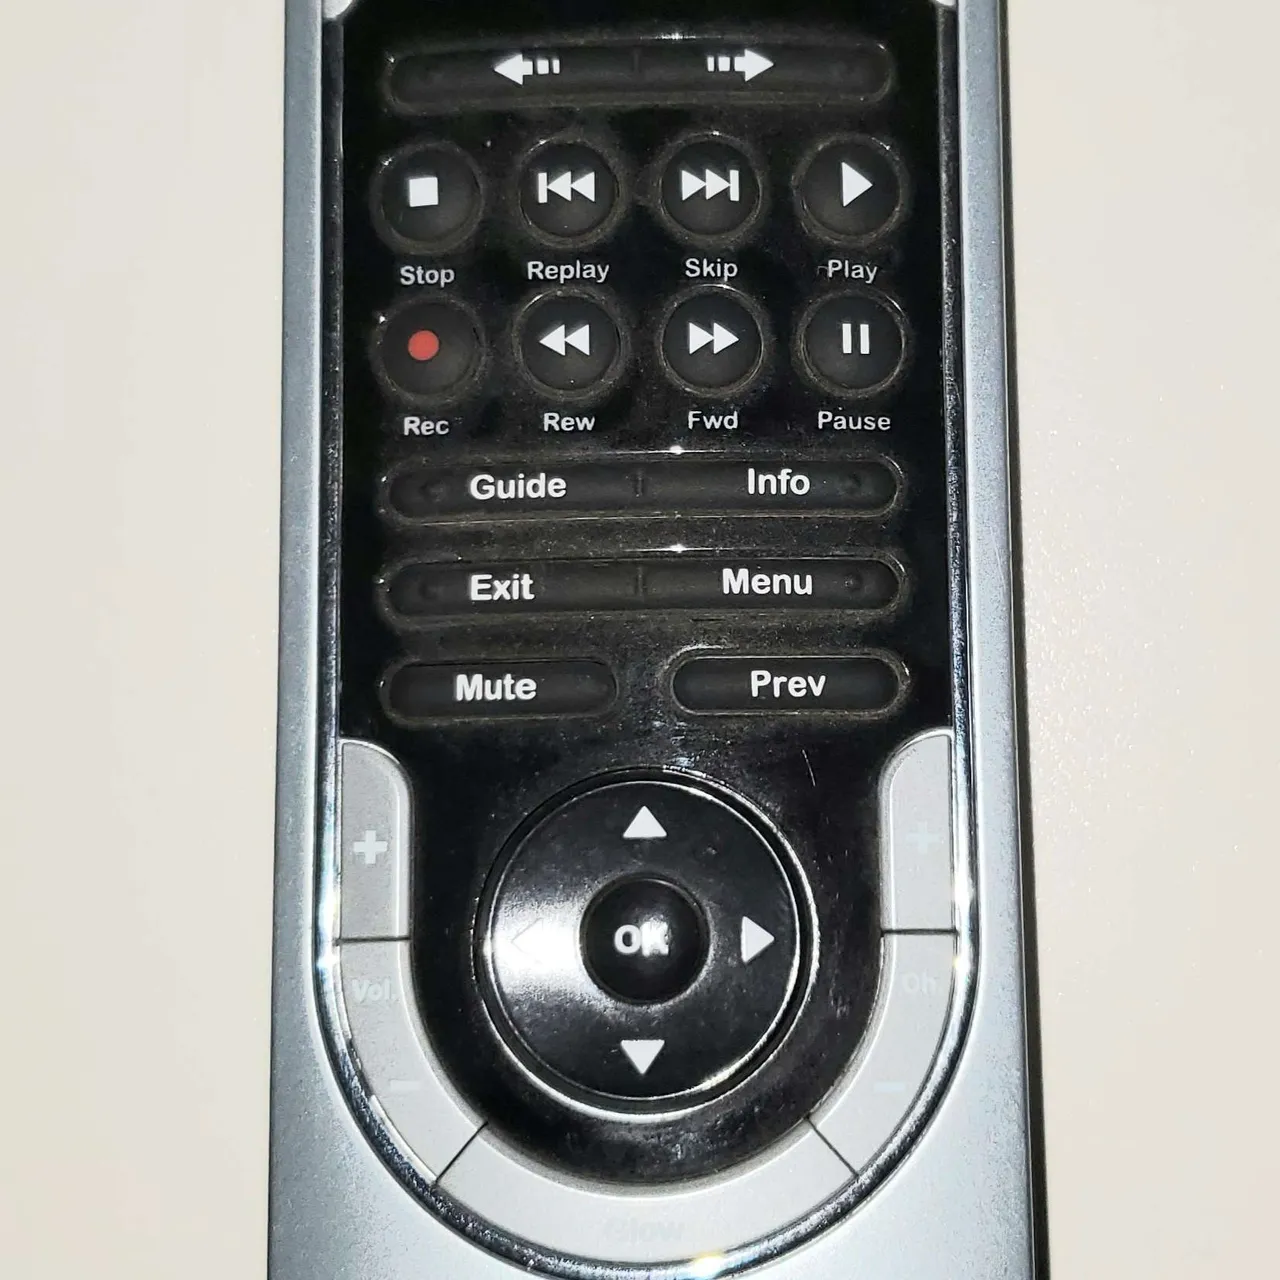 Universal programable remote photo 1